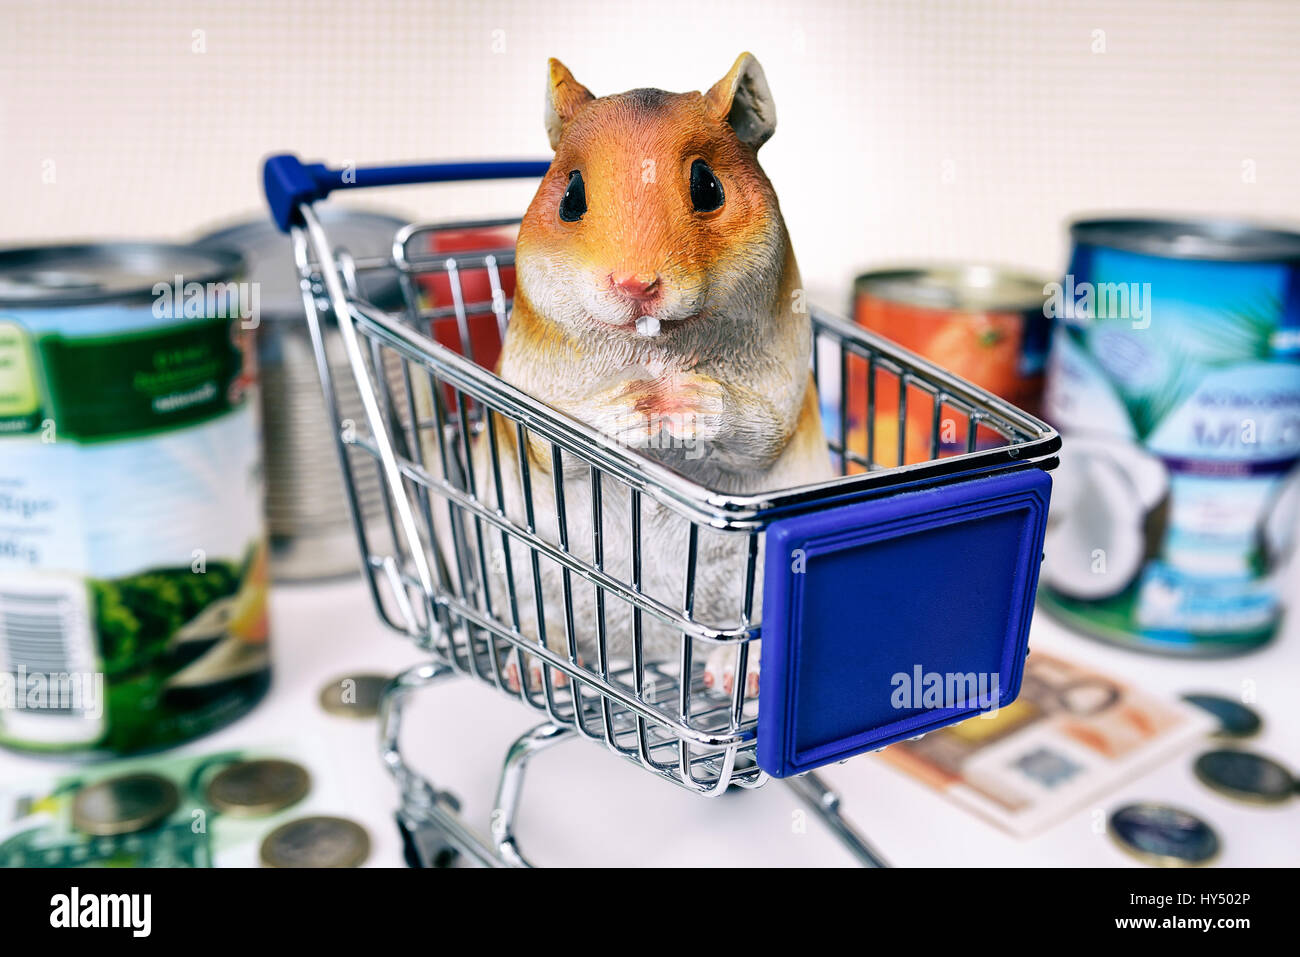 Hamster's figure in the shopping cart, symbolic photo hamster's purchases, Hamsterfigur im Einkaufswagen, Symbolfoto Hamsterkaeufe Stock Photo